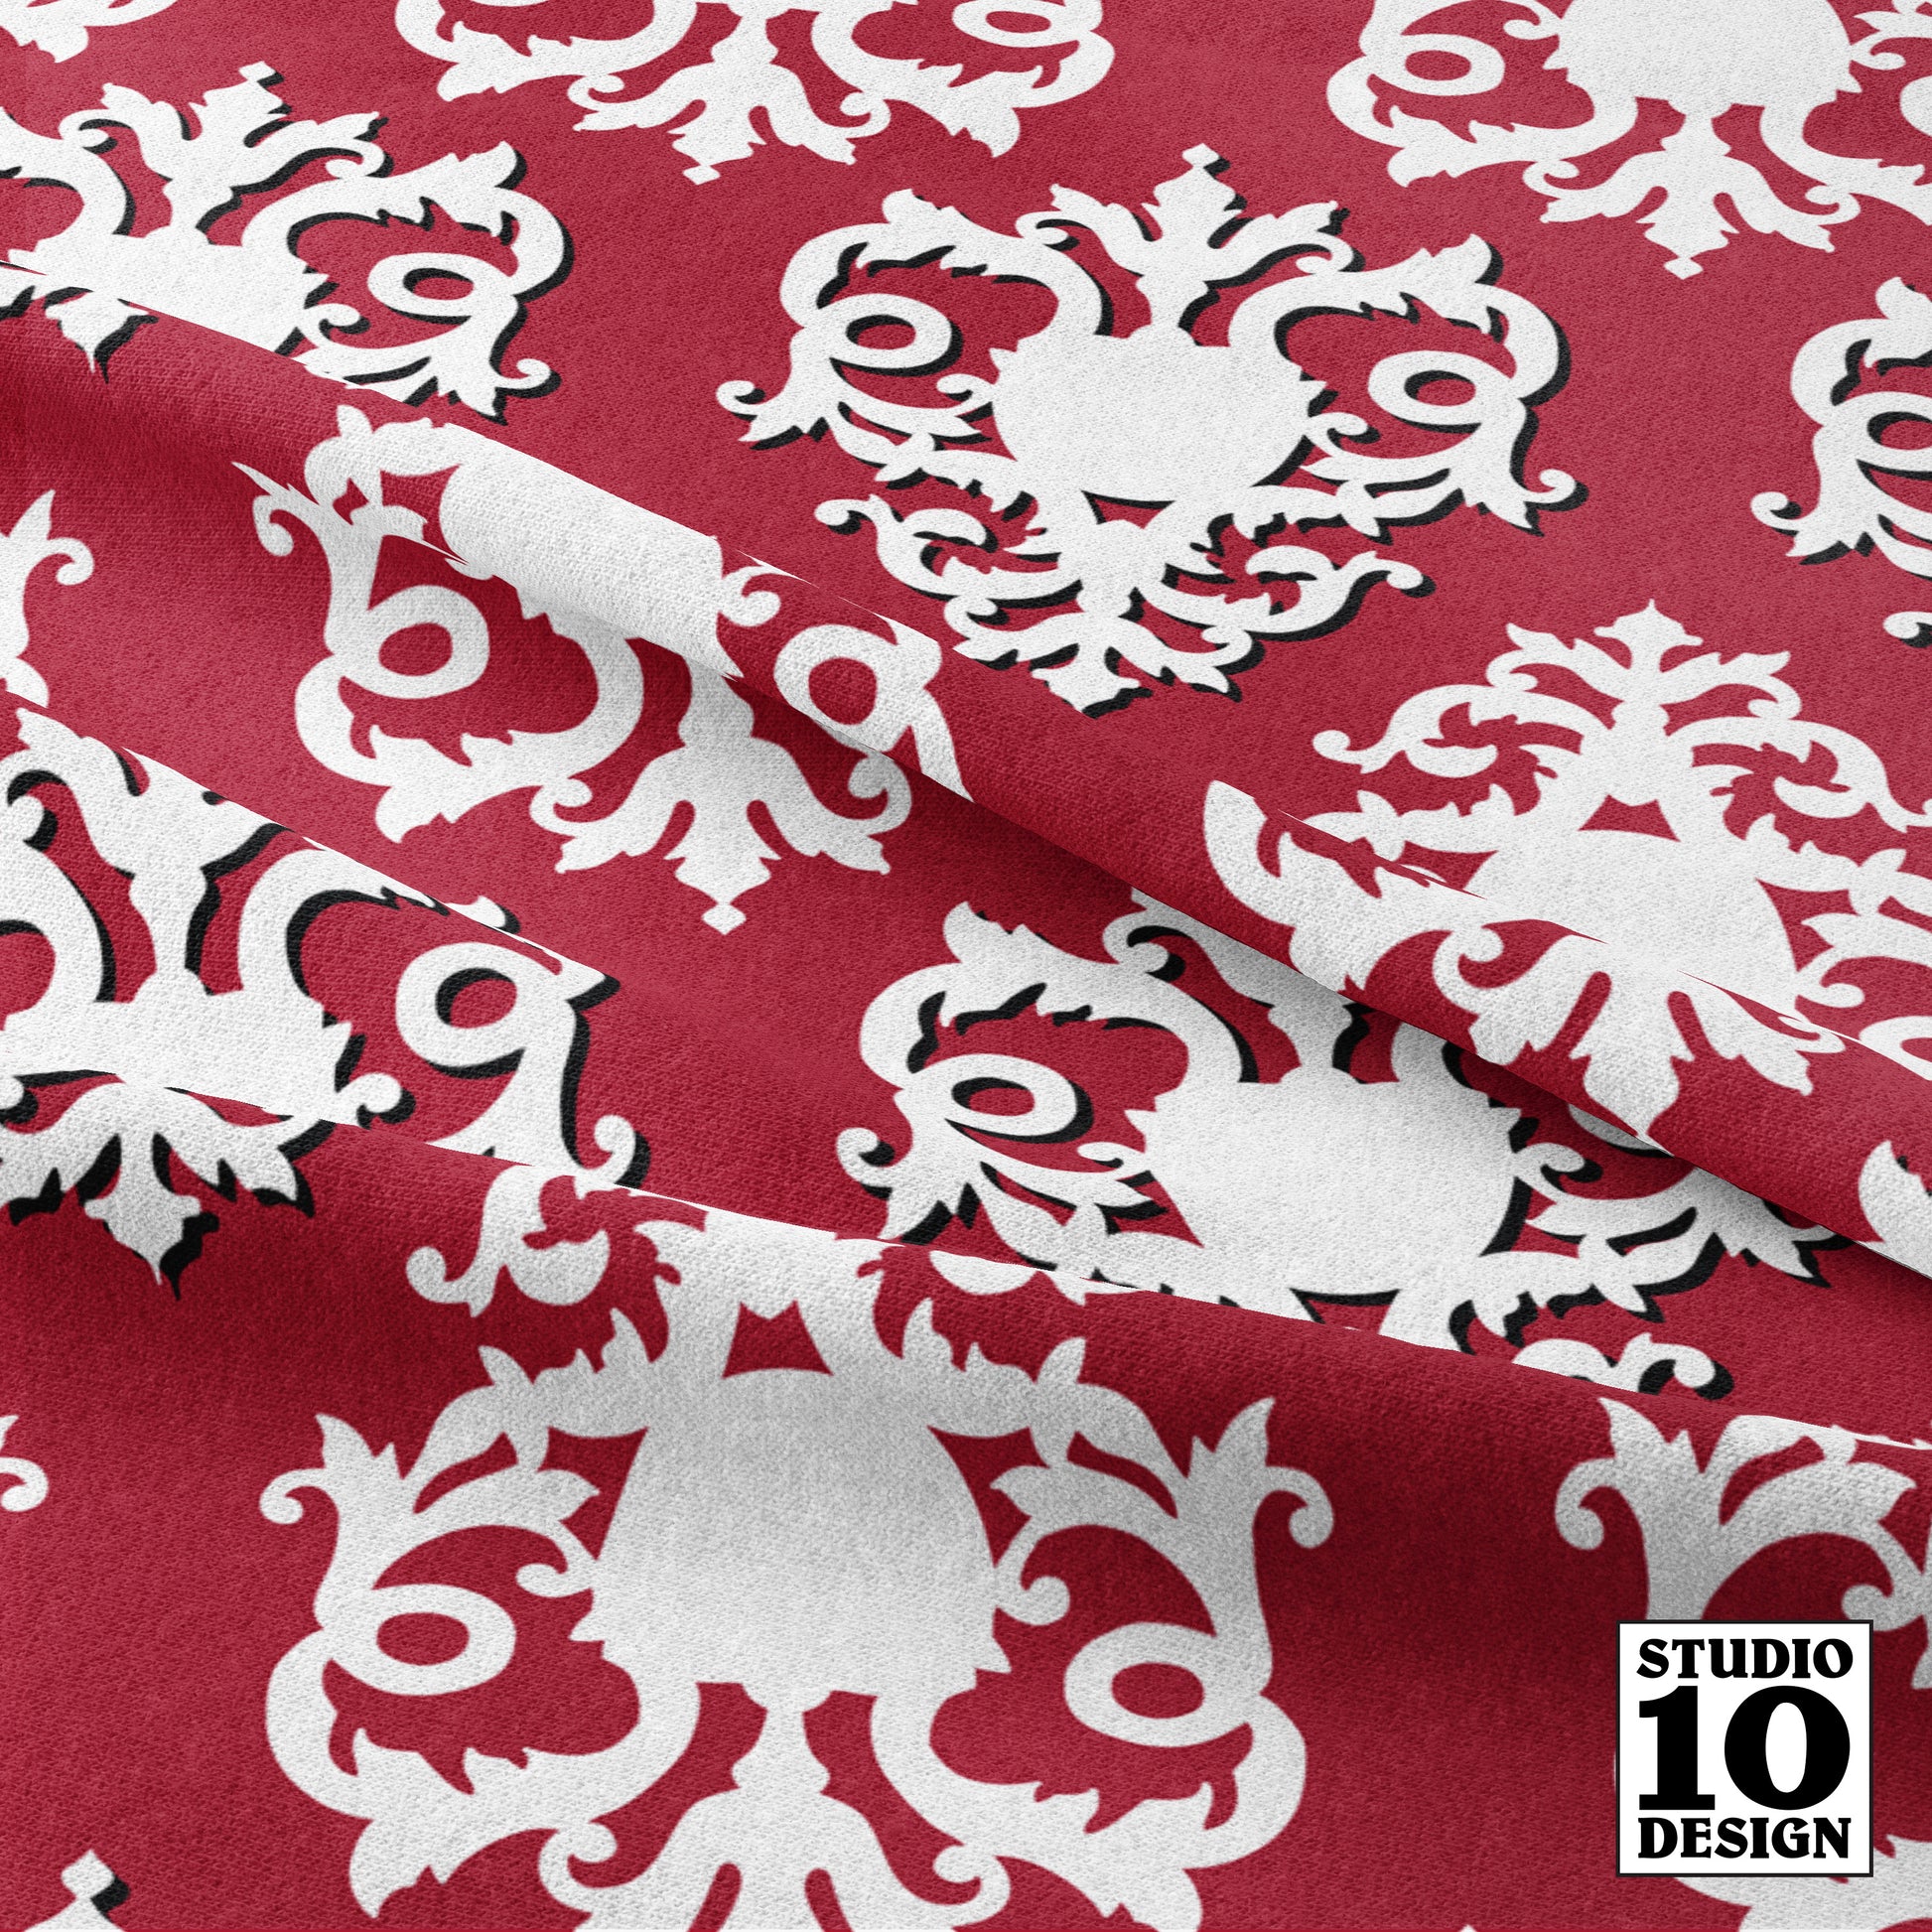 Damask (Red, White, Black) Printed Fabric by Studio Ten Design